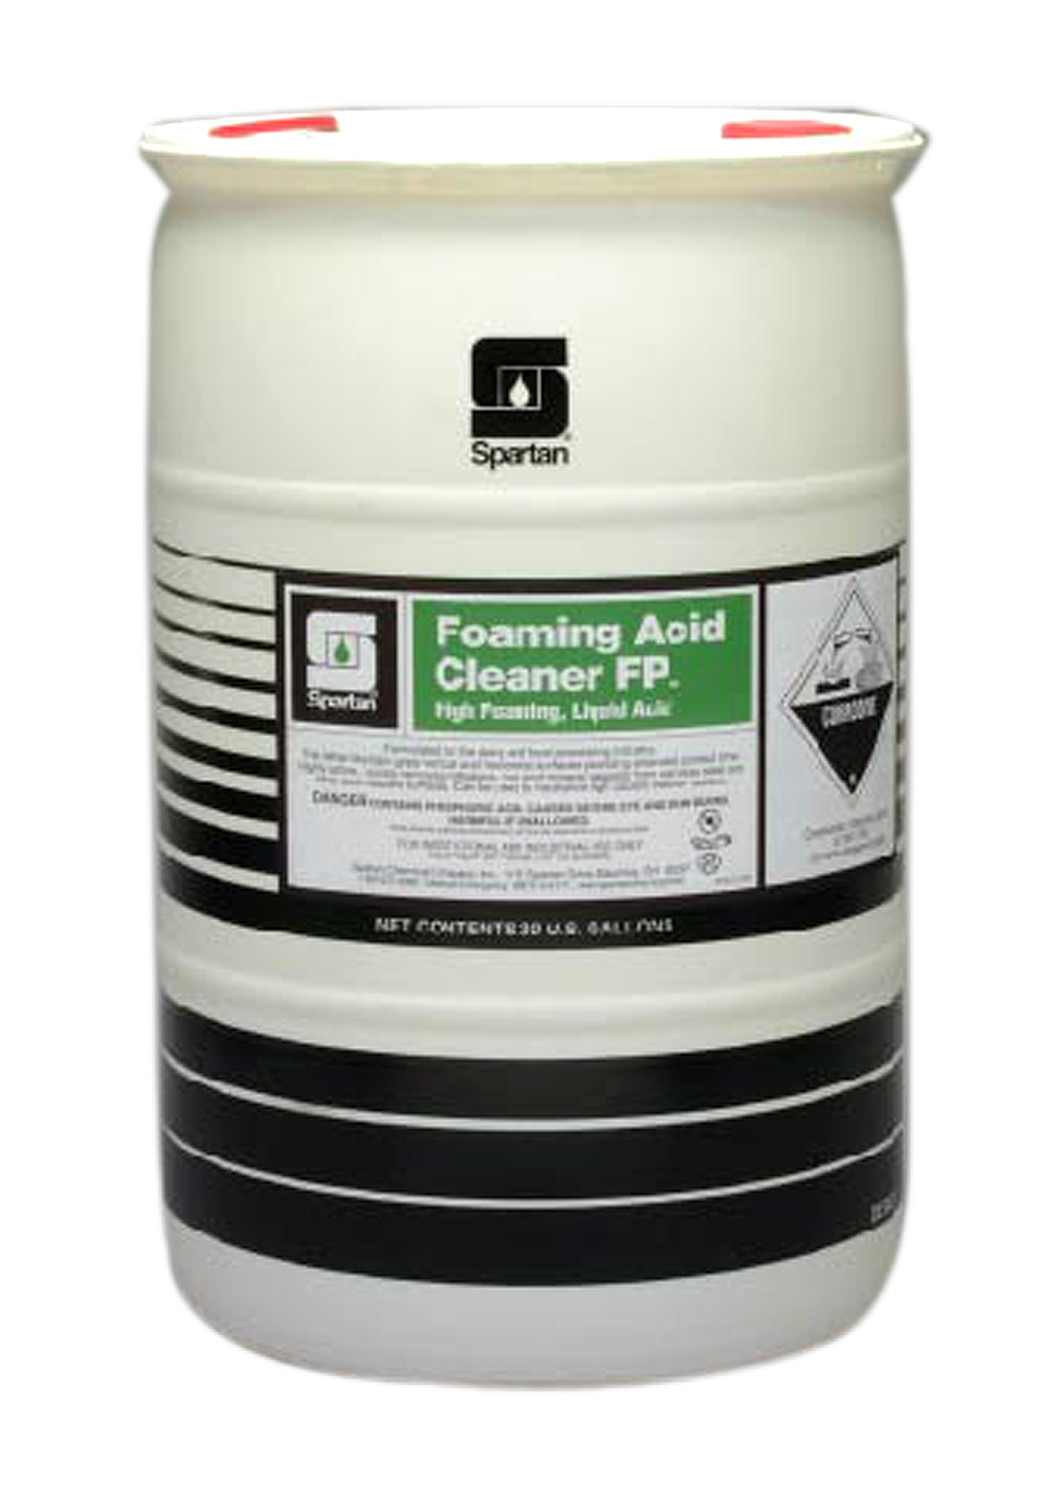 Spartan Chemical Company Foaming Acid Cleaner FP, 30 GAL DRUM